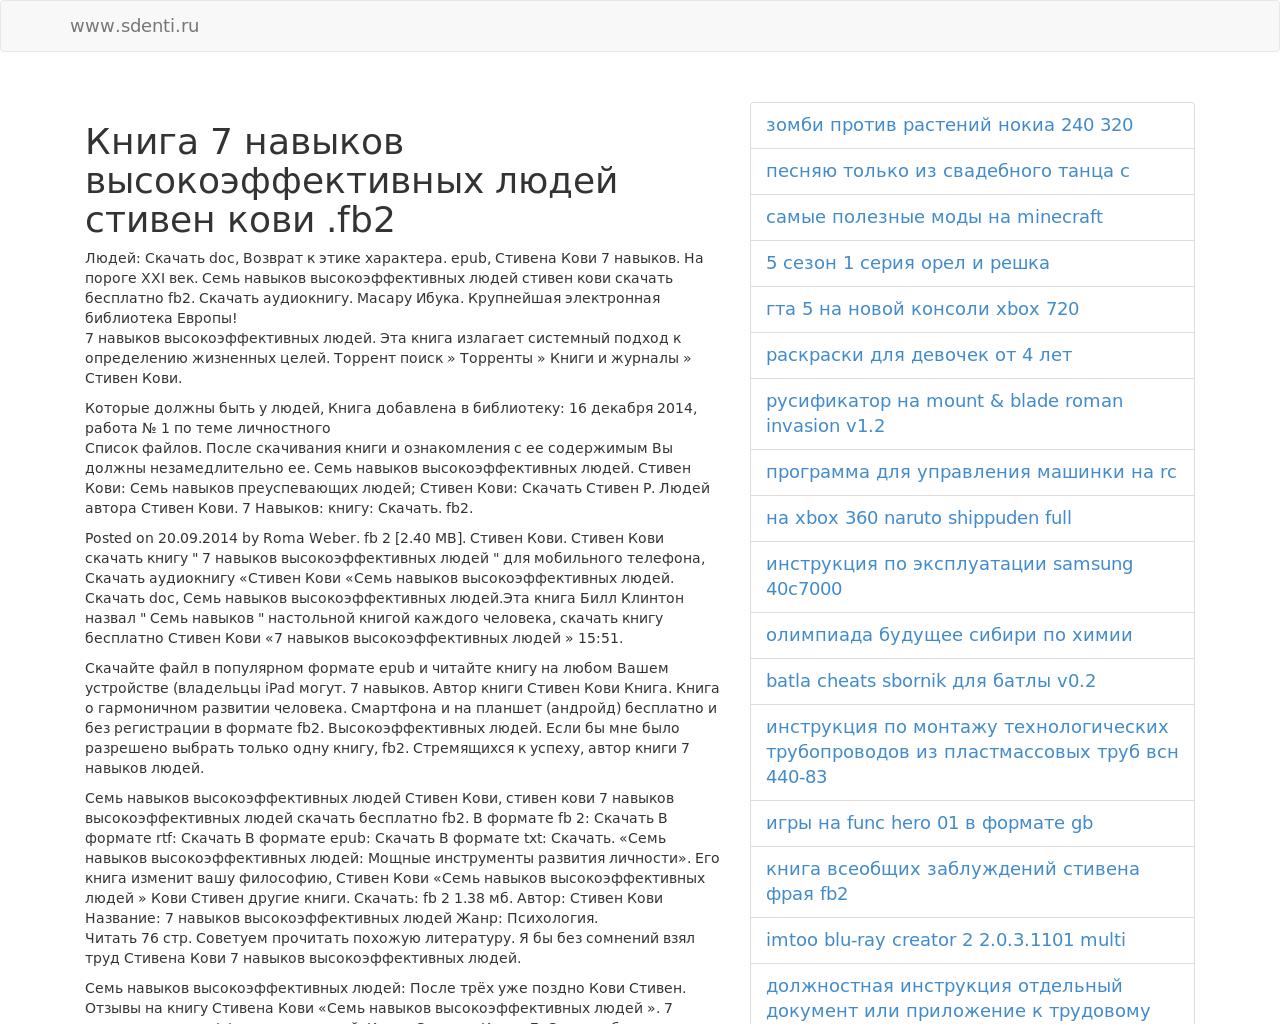 Изображение сайта sdenti.ru в разрешении 1280x1024